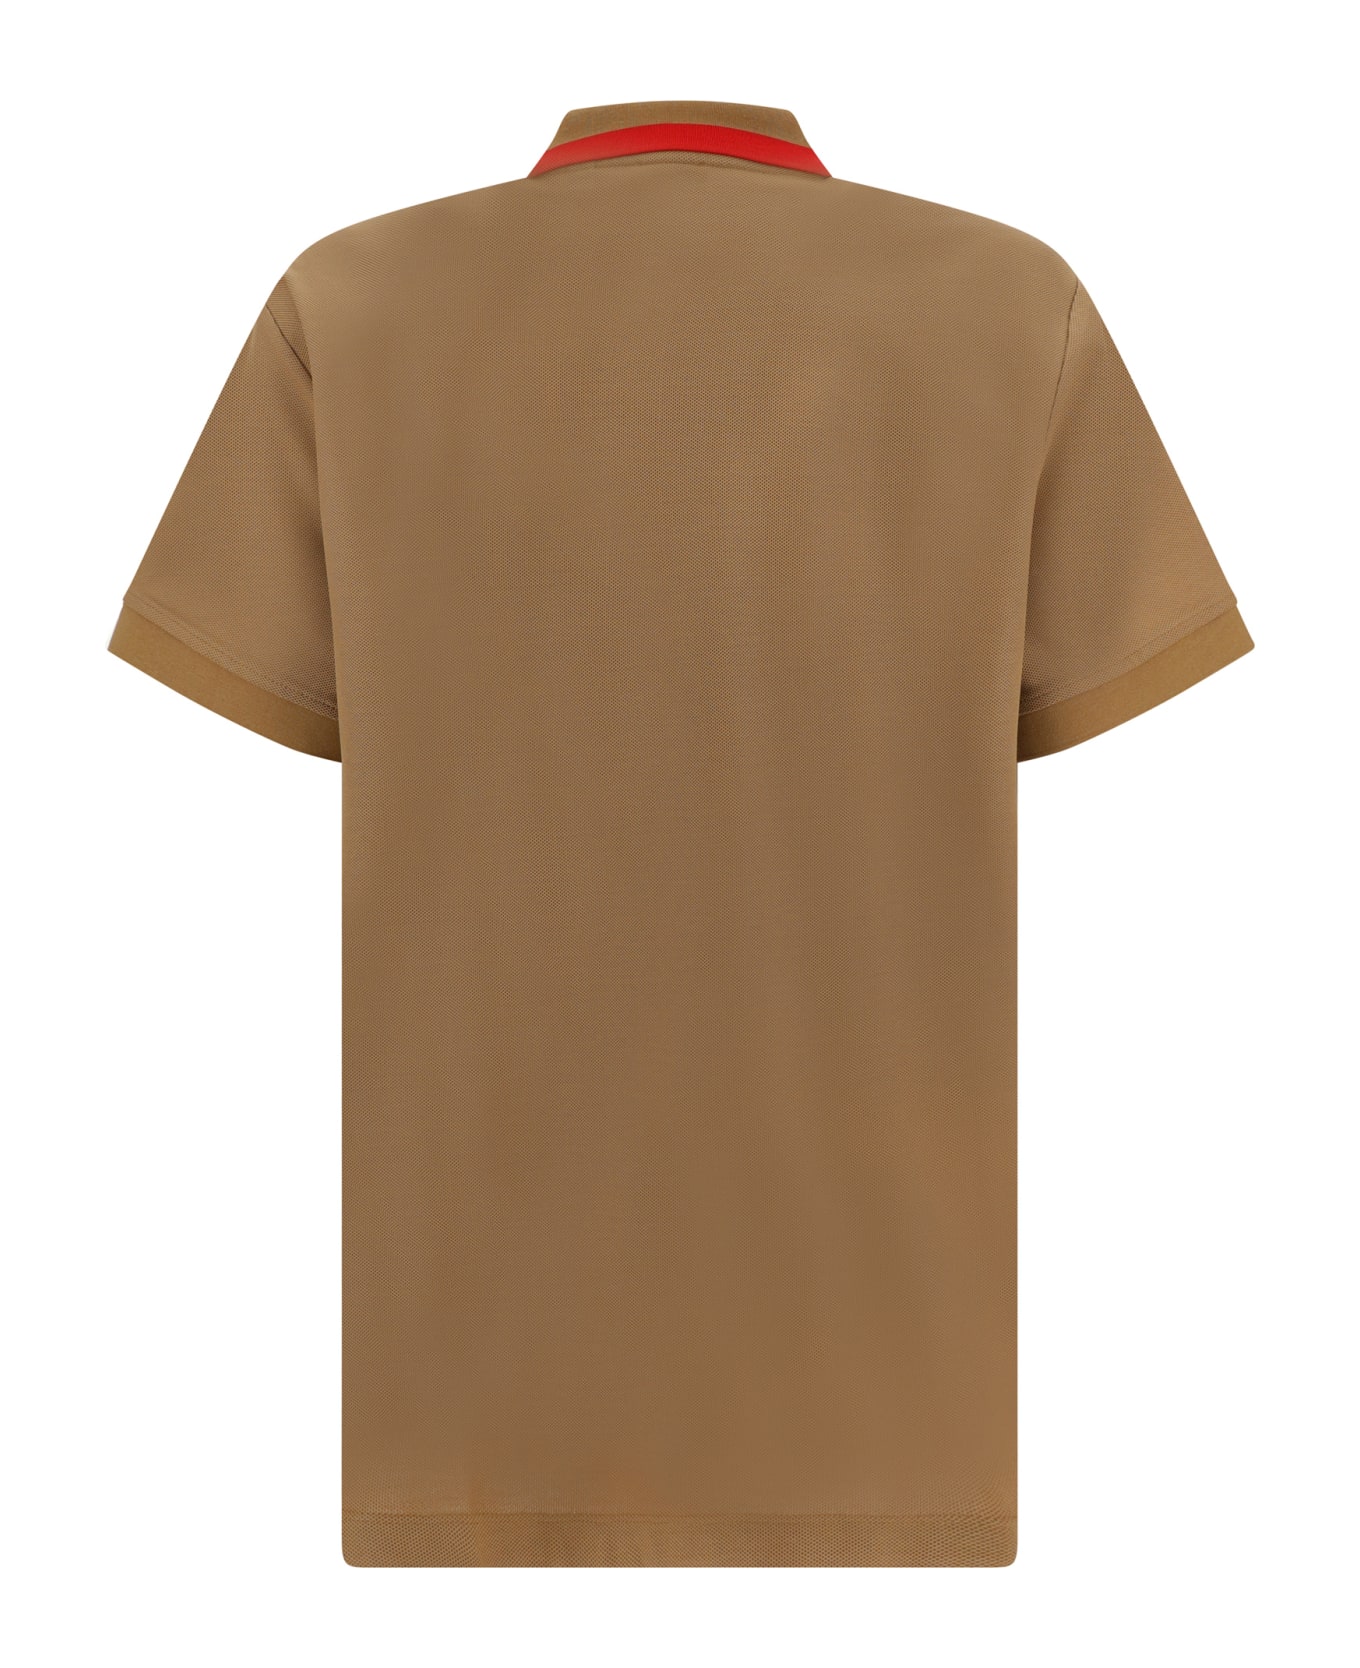 Burberry Logo Detailed Short Sleeved Polo Shirt - Camel